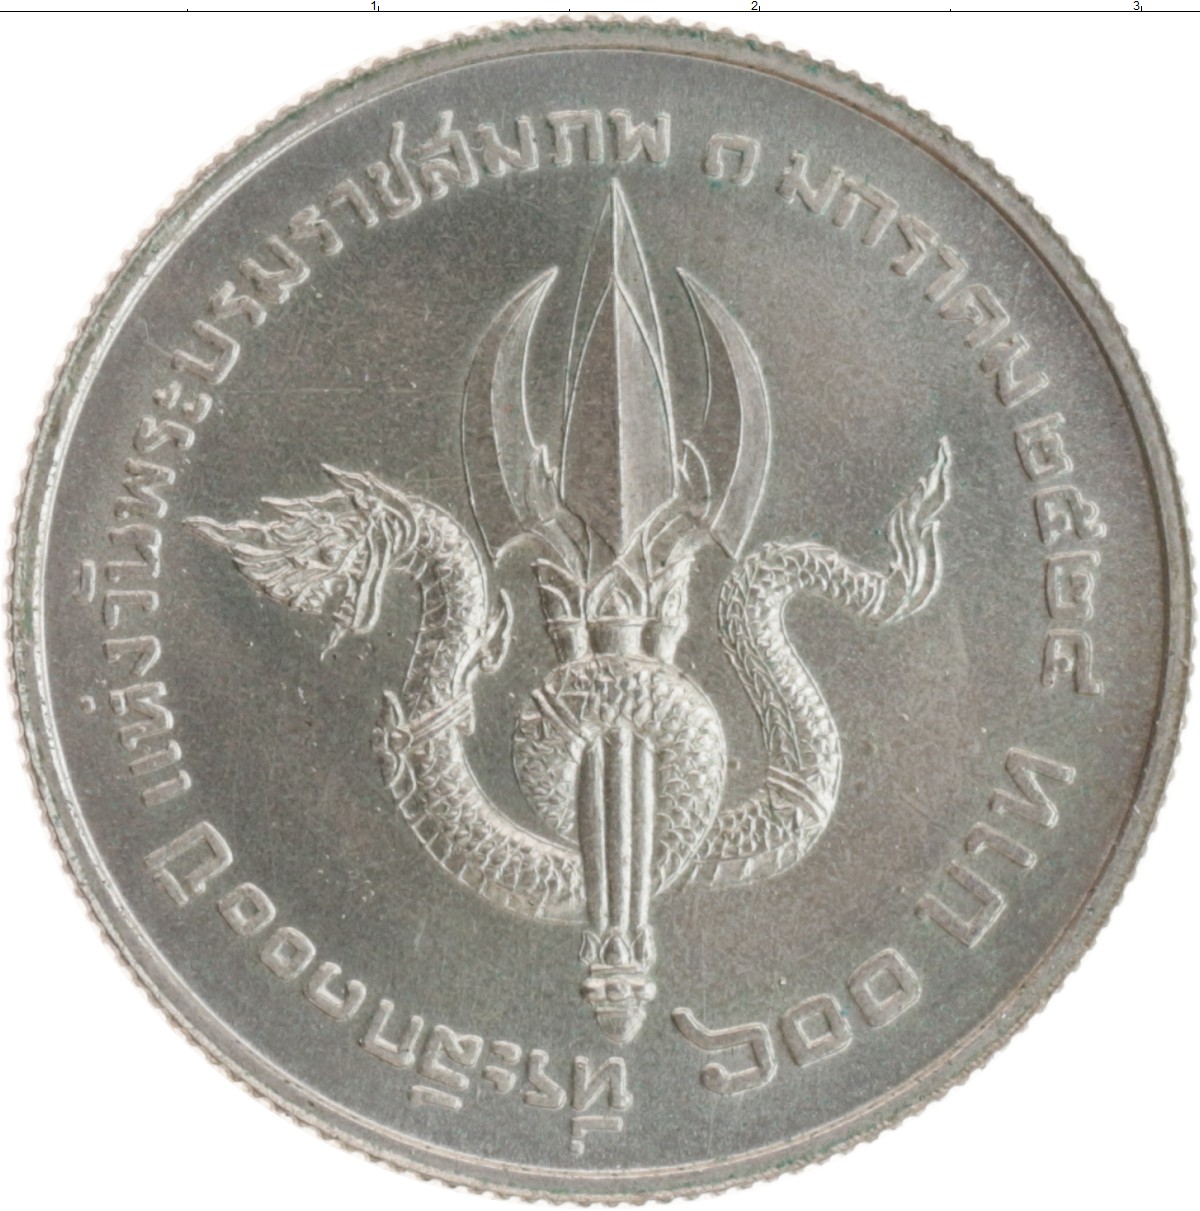 600 бат. Монеты Тайланда. 200 Бат 1981. Копейки Таиланда. 600 Бат в рублях.